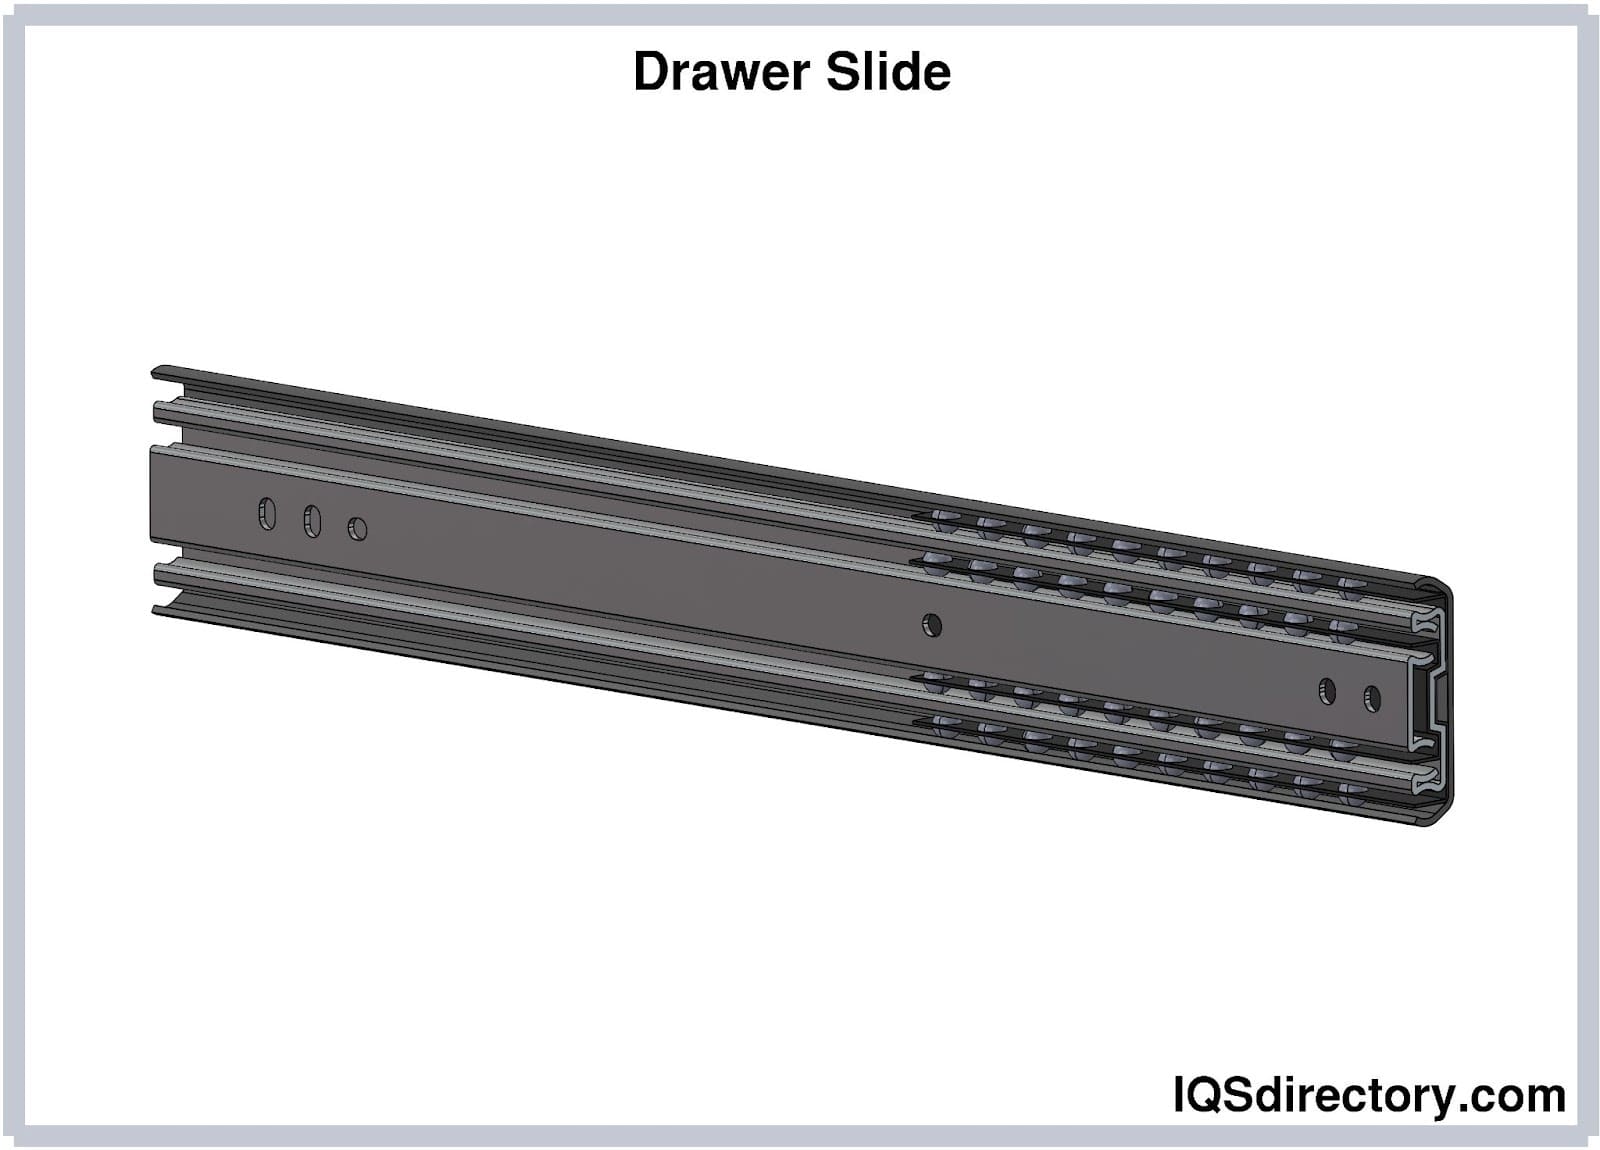 Drawer Slide